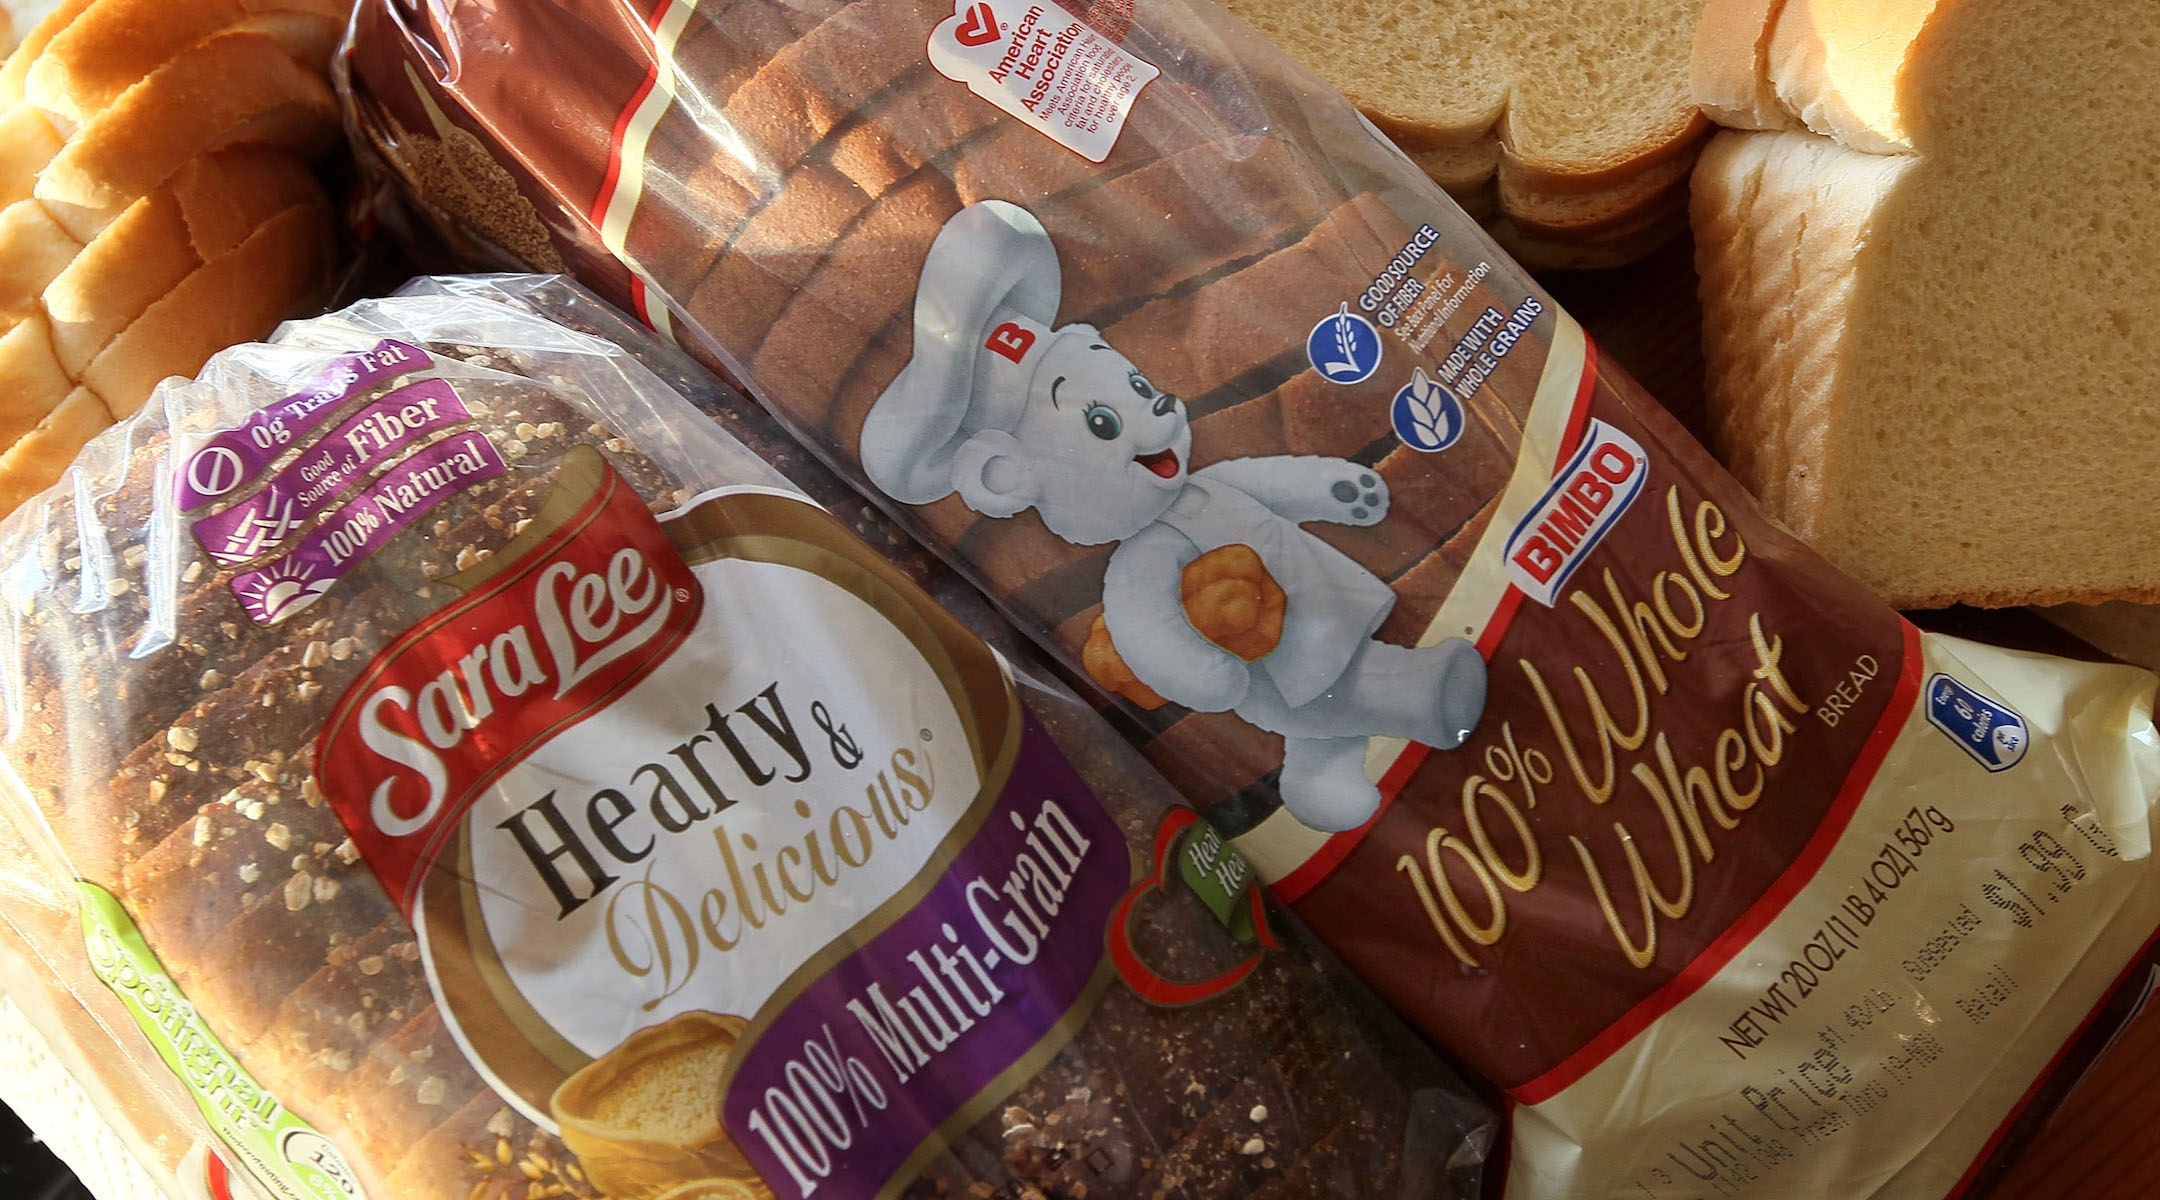 bread brands